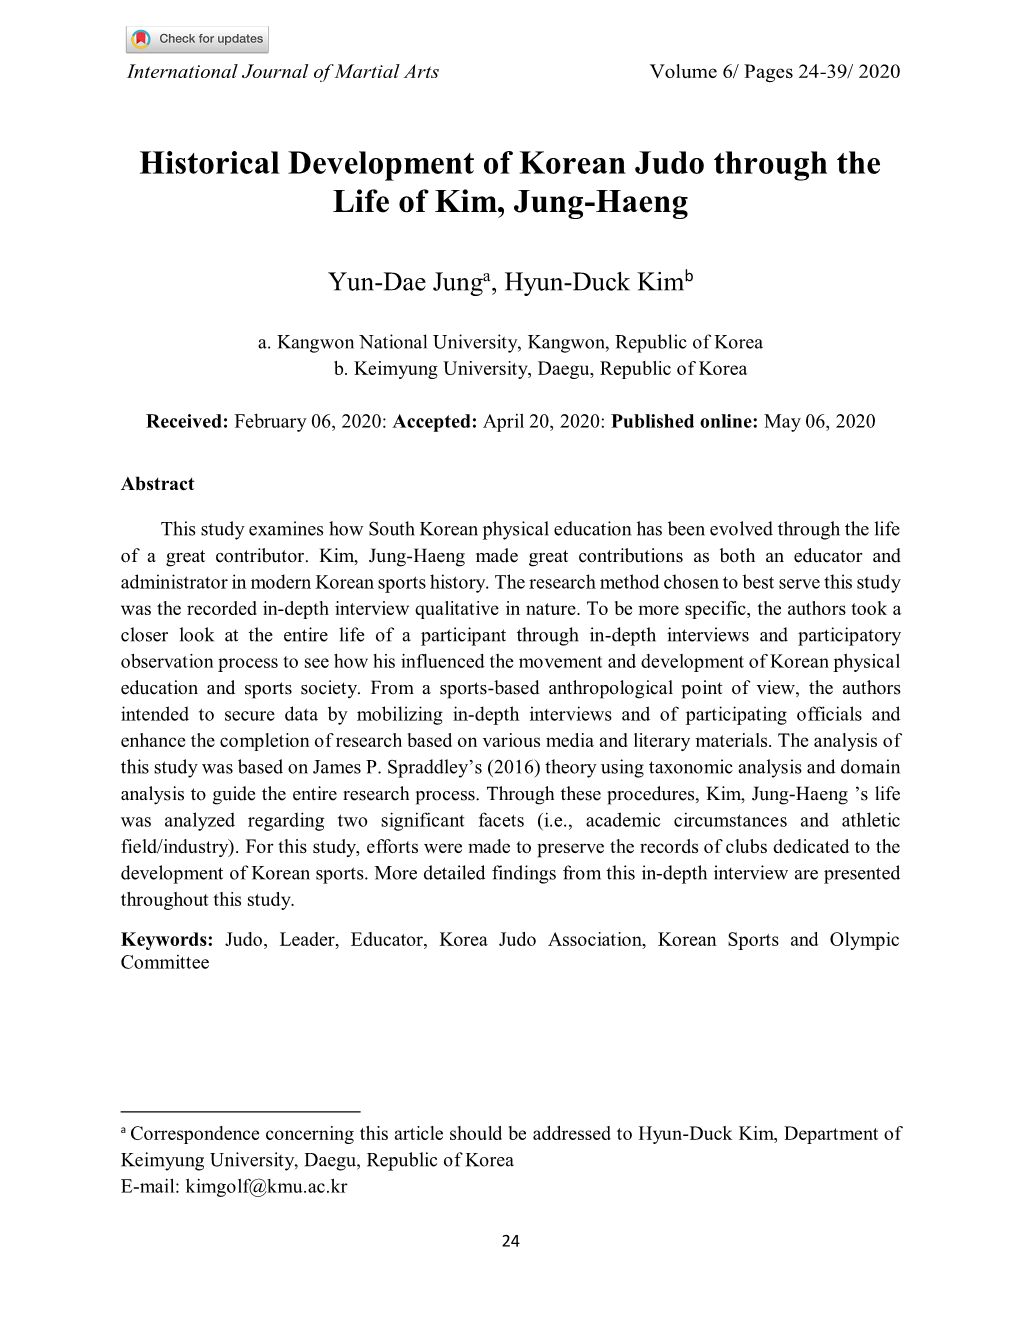 Historical Development of Korean Judo Through the Life of Kim, Jung-Haeng